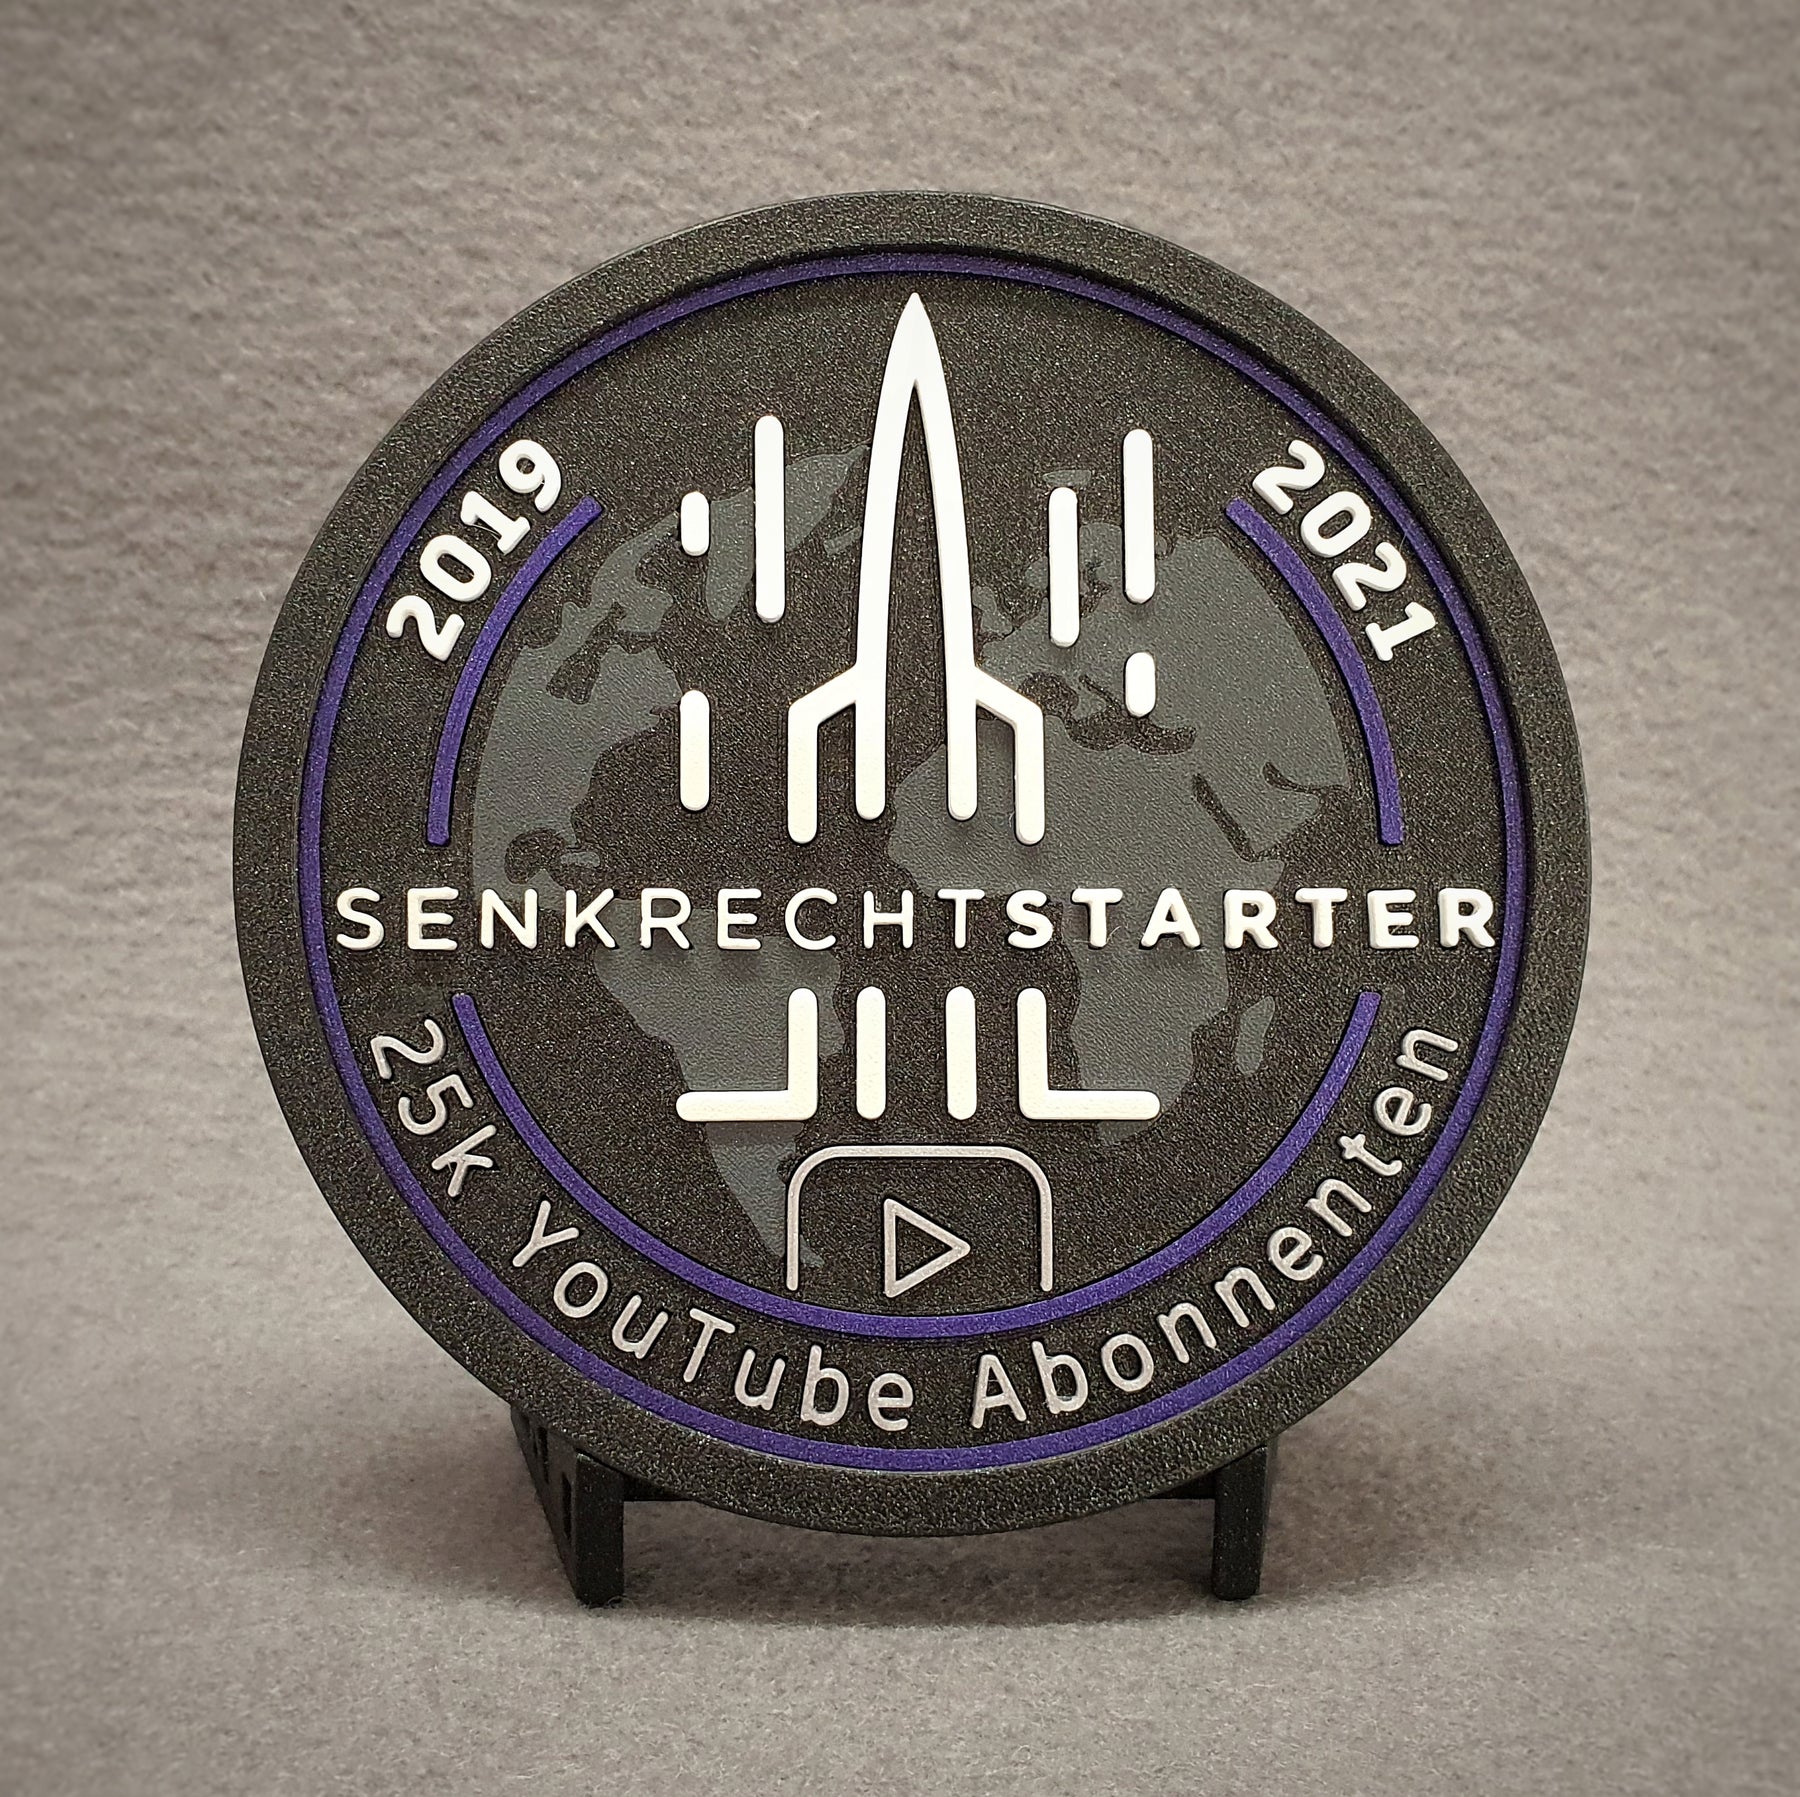 Senkrechtstarter - 25k Subscribers 3D Printed Patch